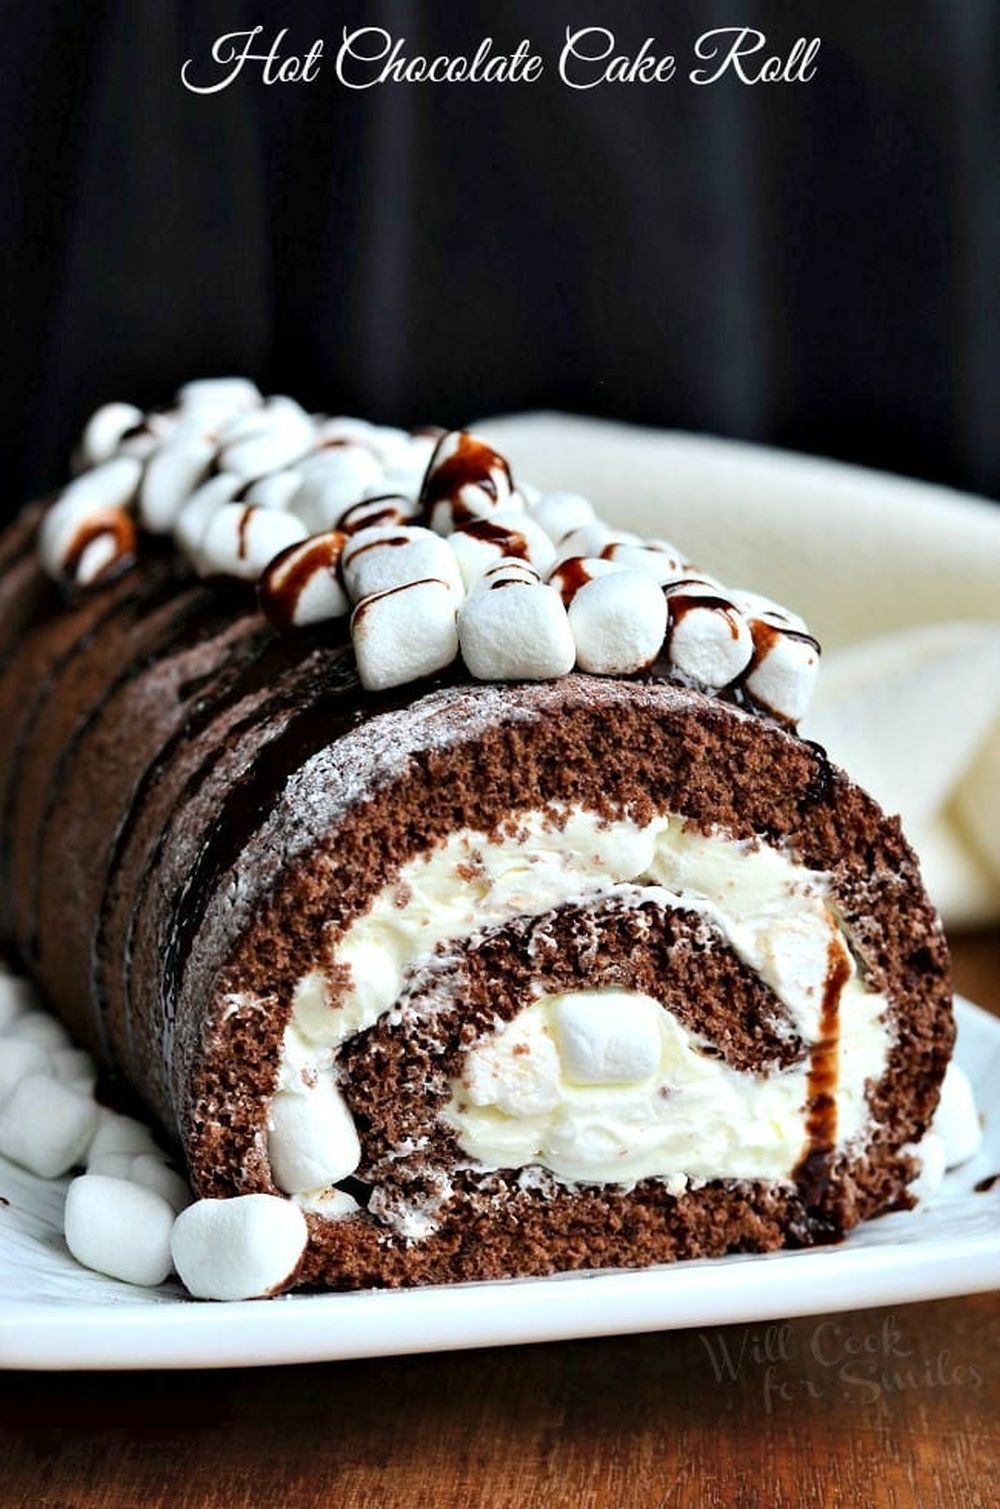 Hot chocolate cake roll tasty valentine's day desserts